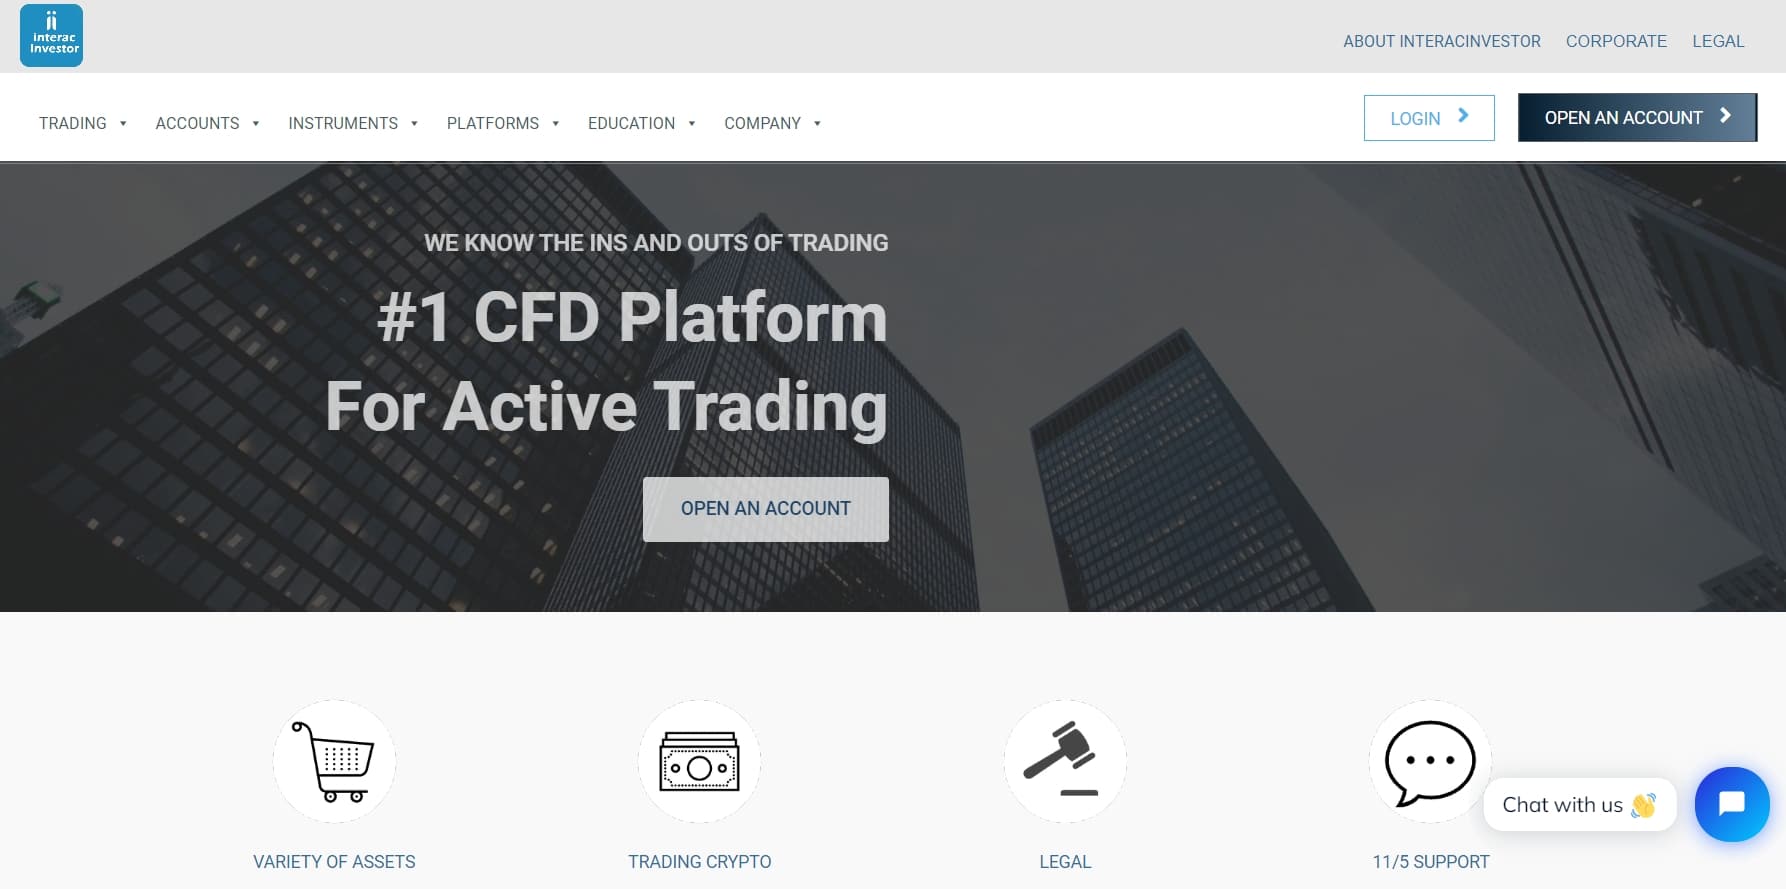 Interacinvestor homepage